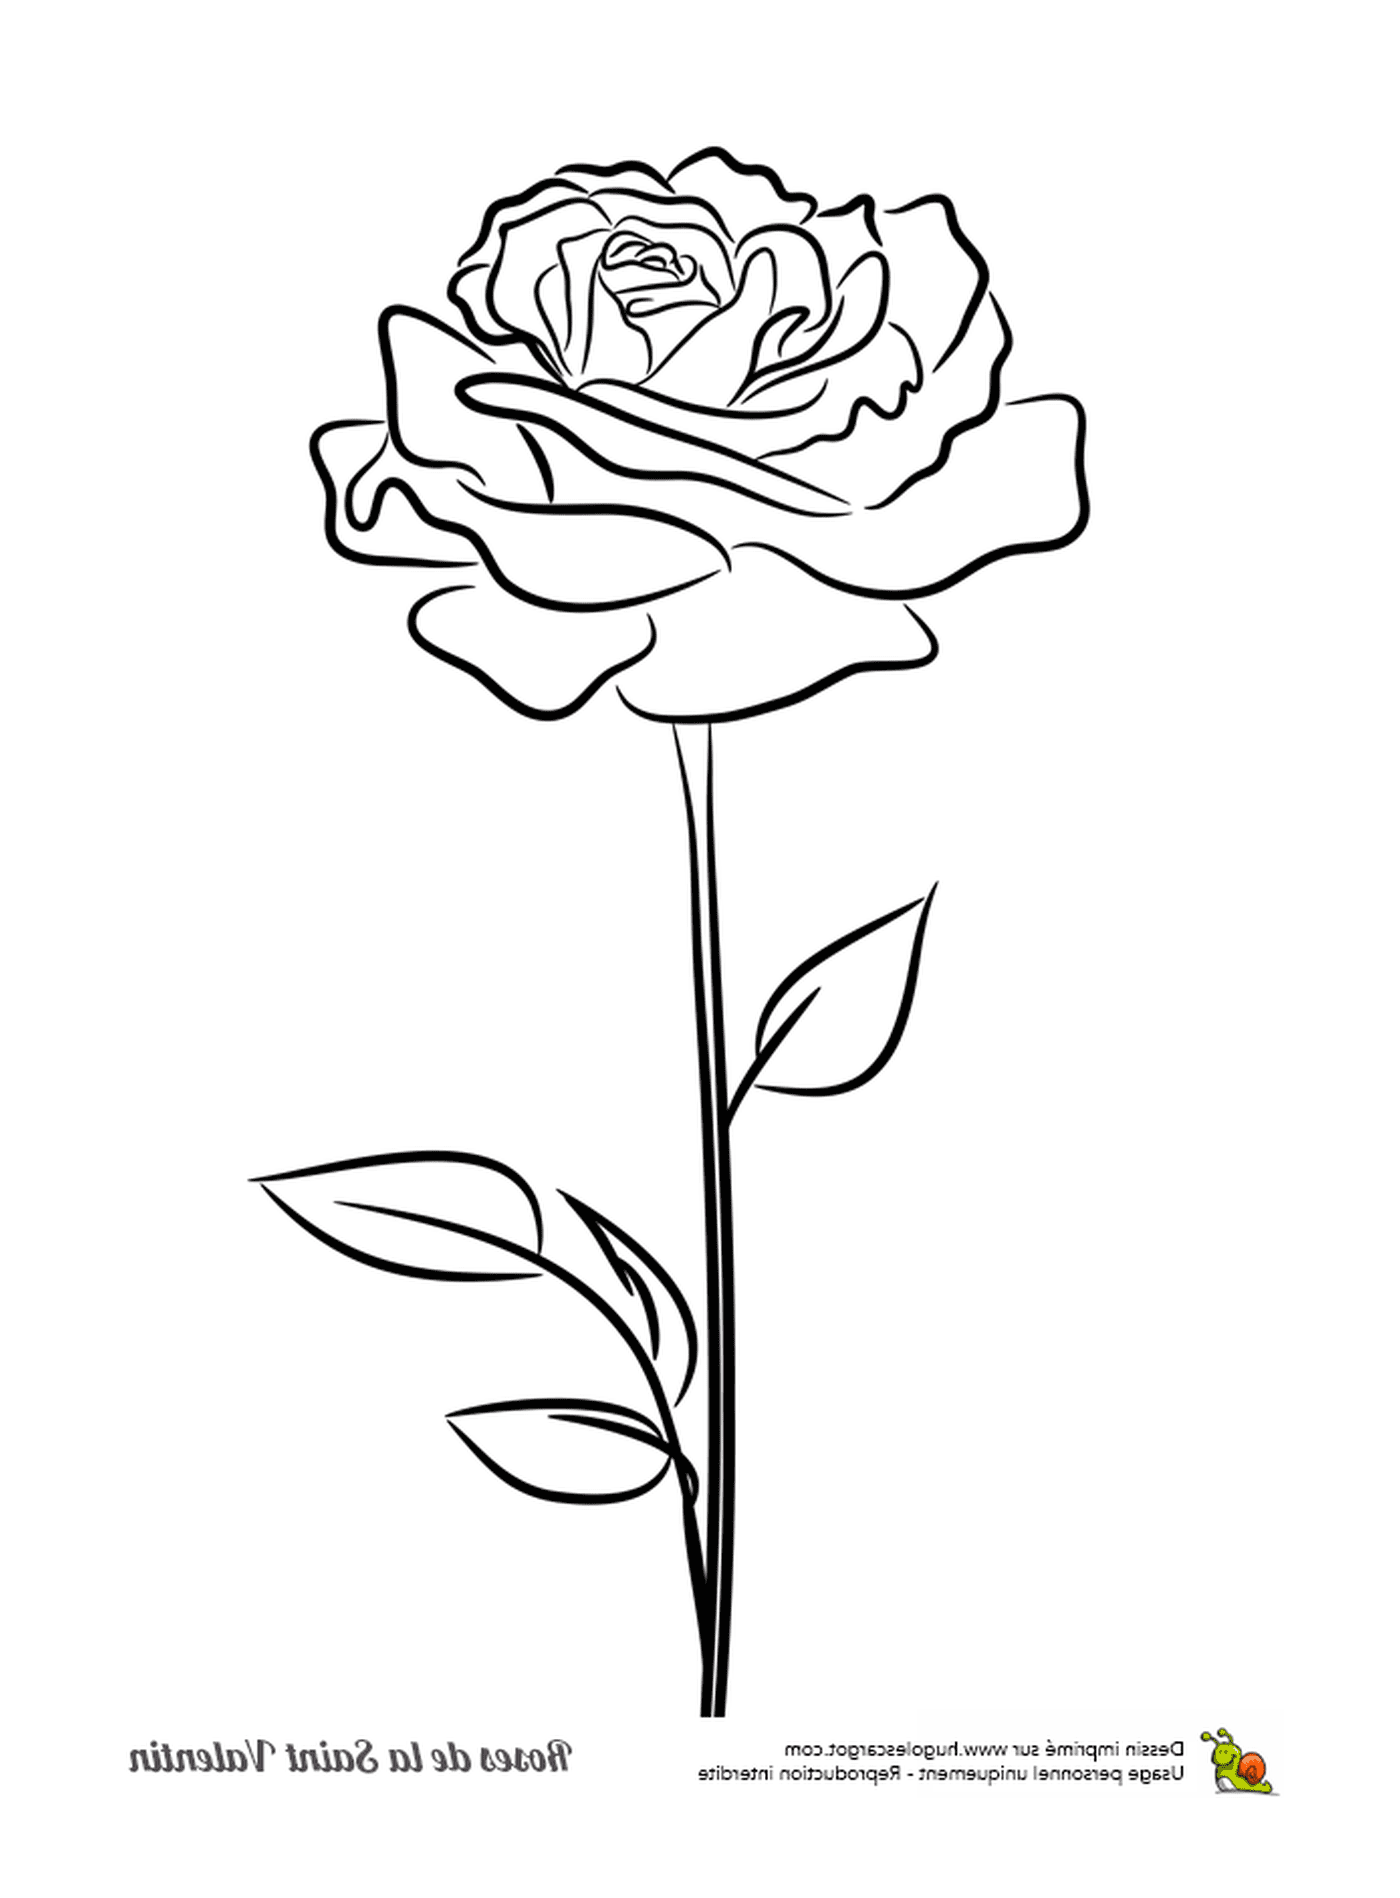  A rose 